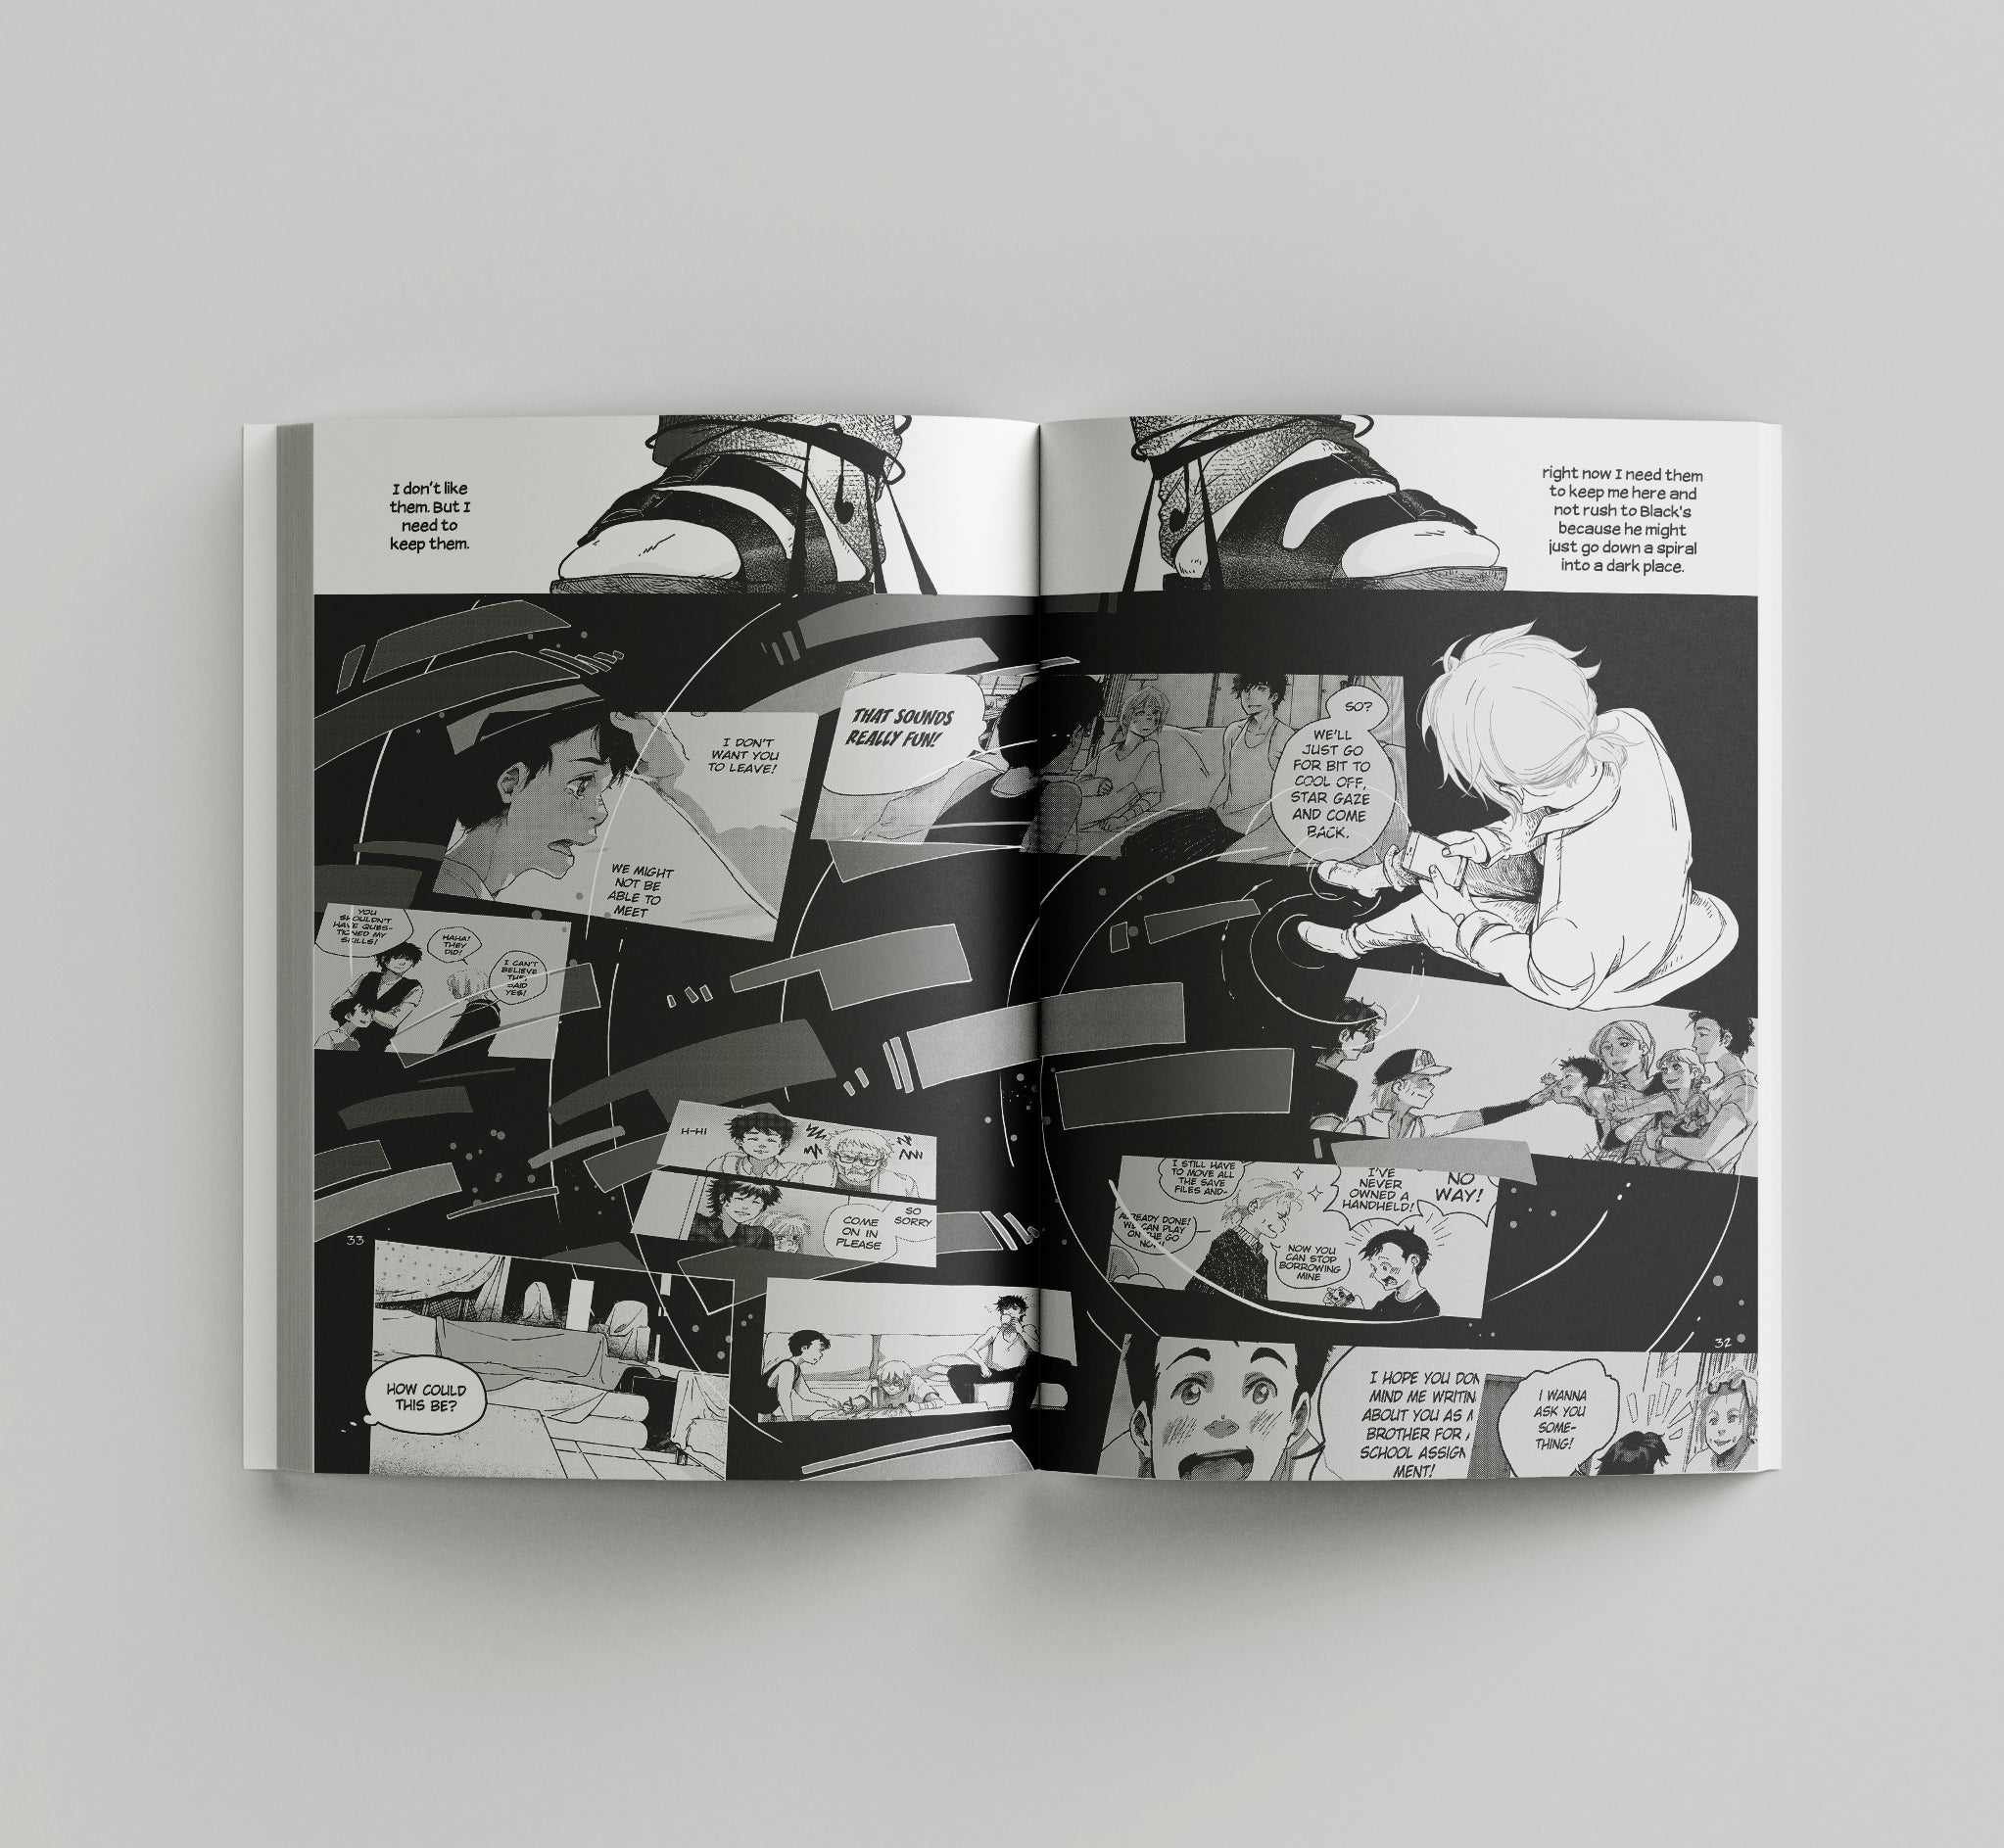 Book] Grey is Box Set 1: Volumes 1-4 – Shop of dee Juusan • Beyond the  Mirage